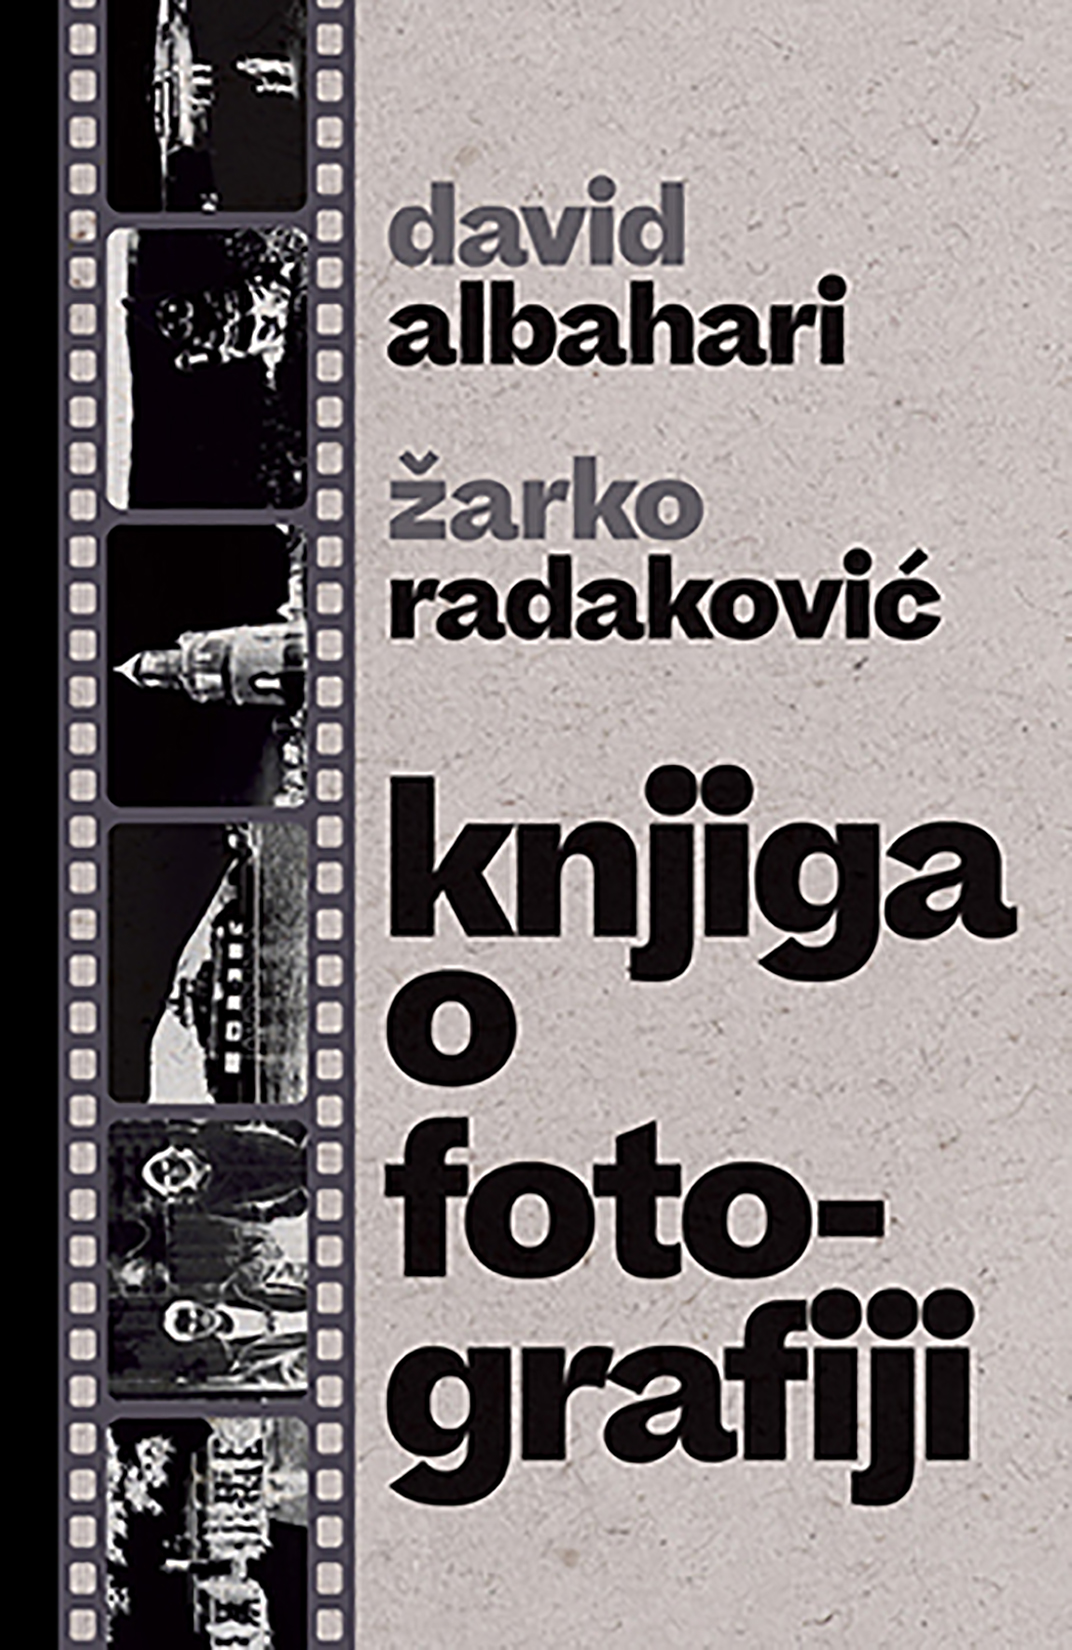 David Albahari, Žarko Radakovć, Knjiga o fotografiji, knjiga, knjige